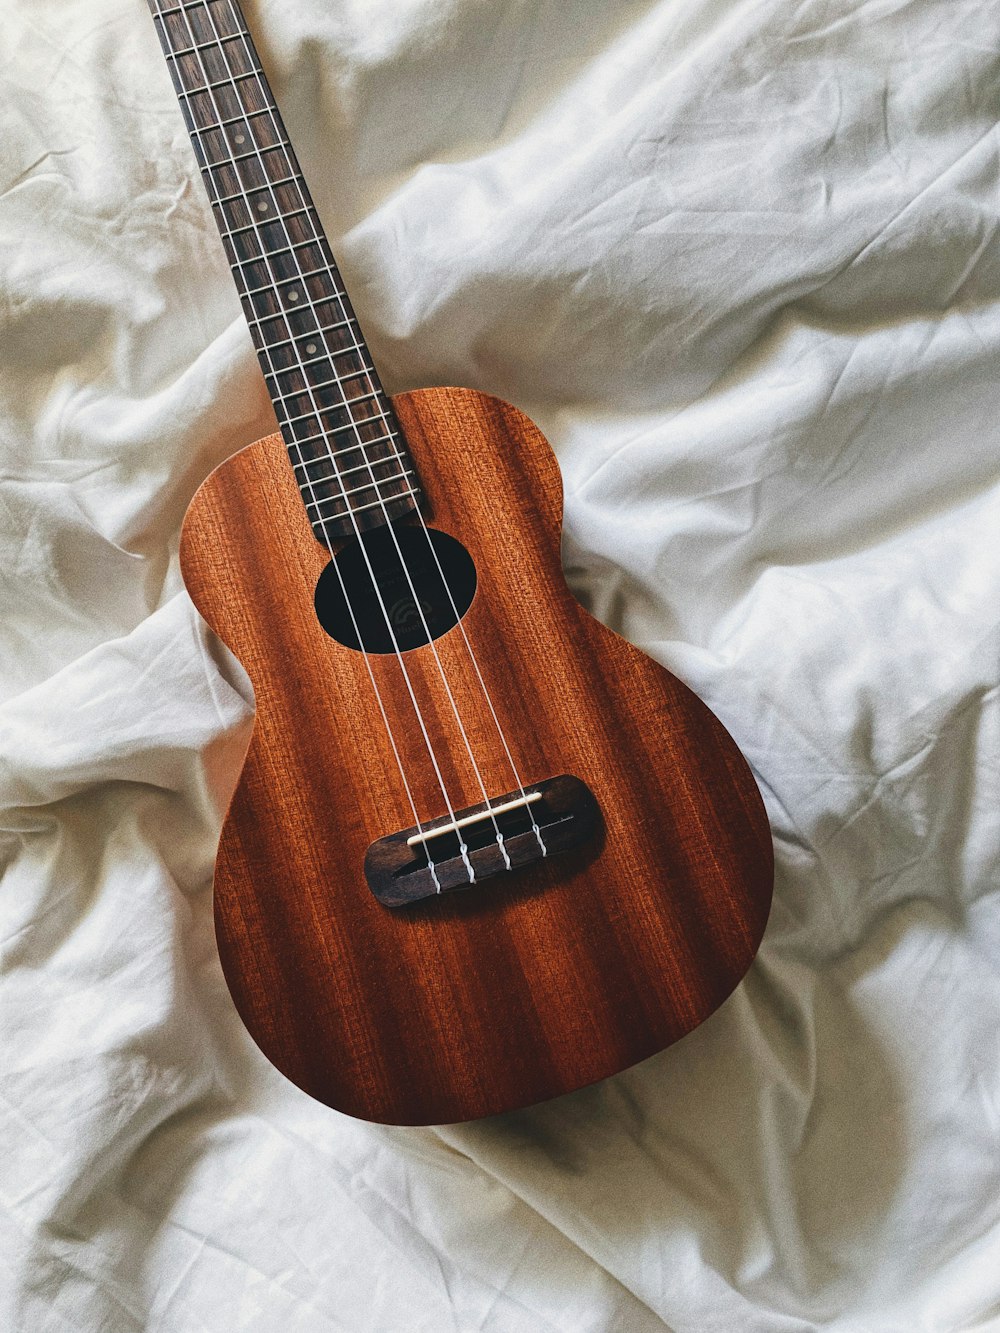 Una guitarra marrón sobre una sábana blanca